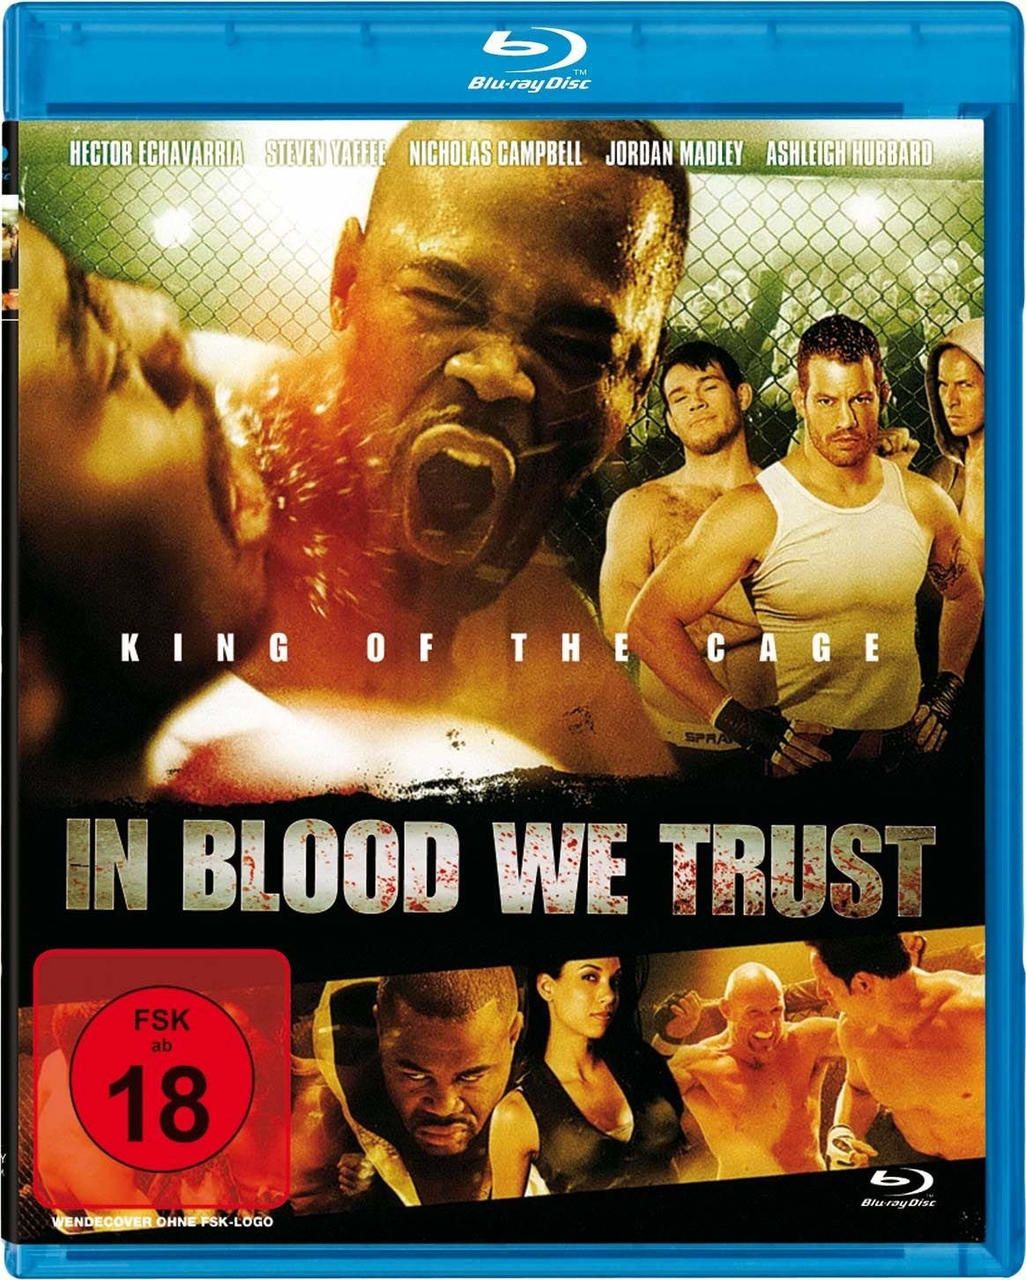 In Blood Trust Blu-ray We